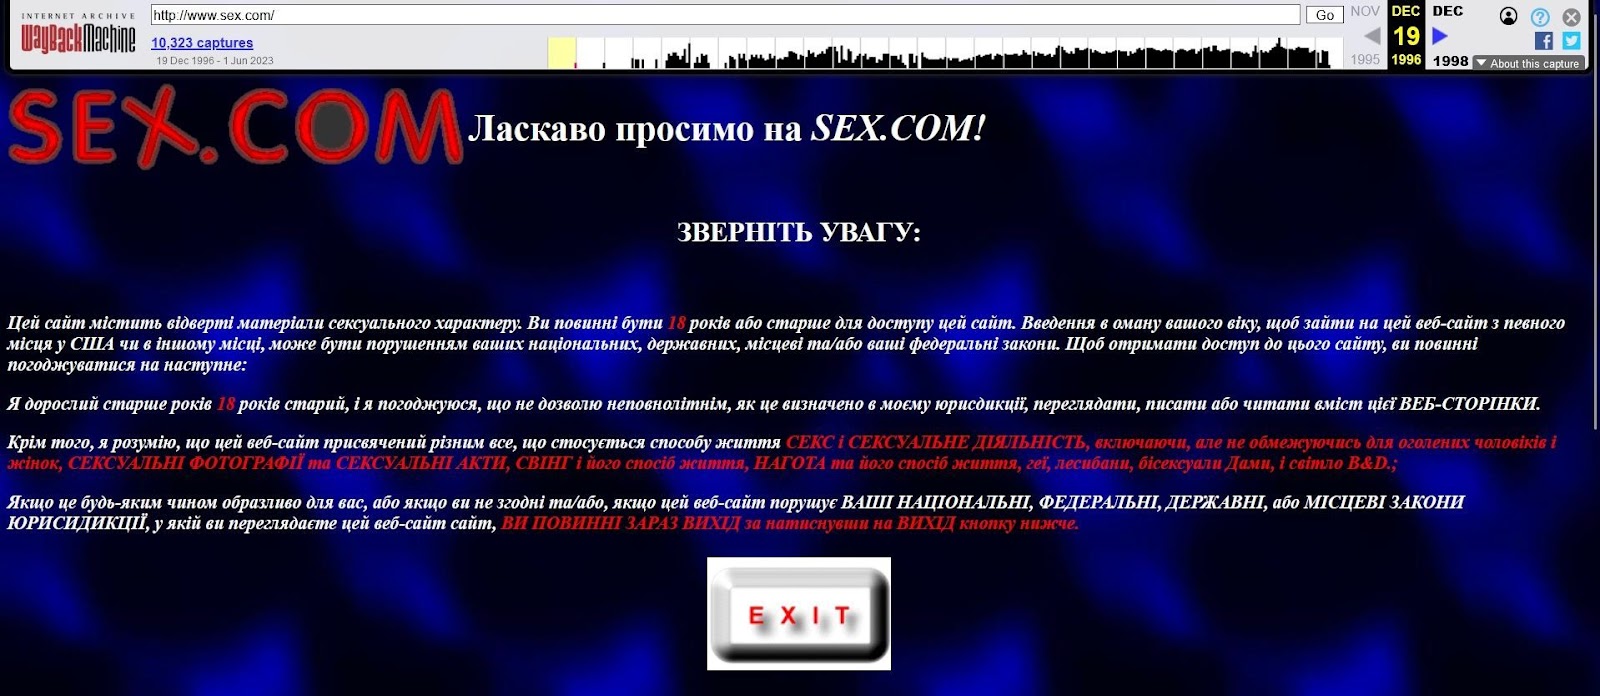 Сайт в 1996 році